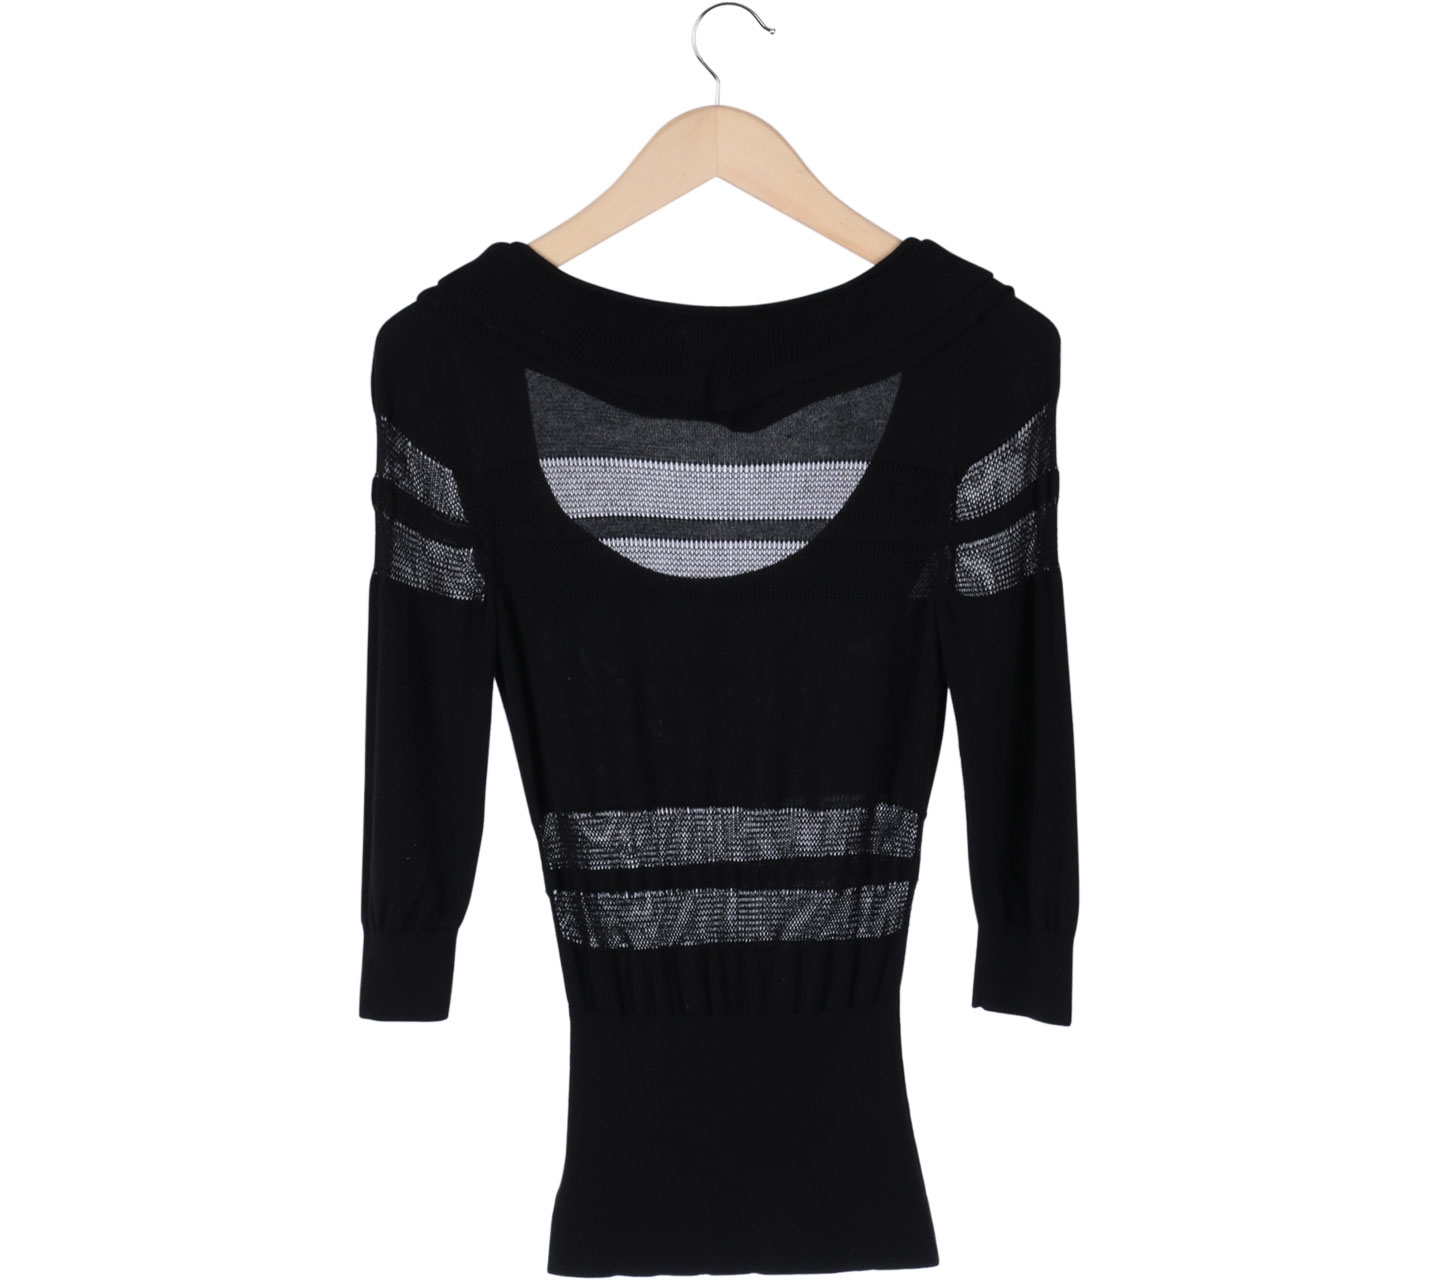 Bebe Black Sweater